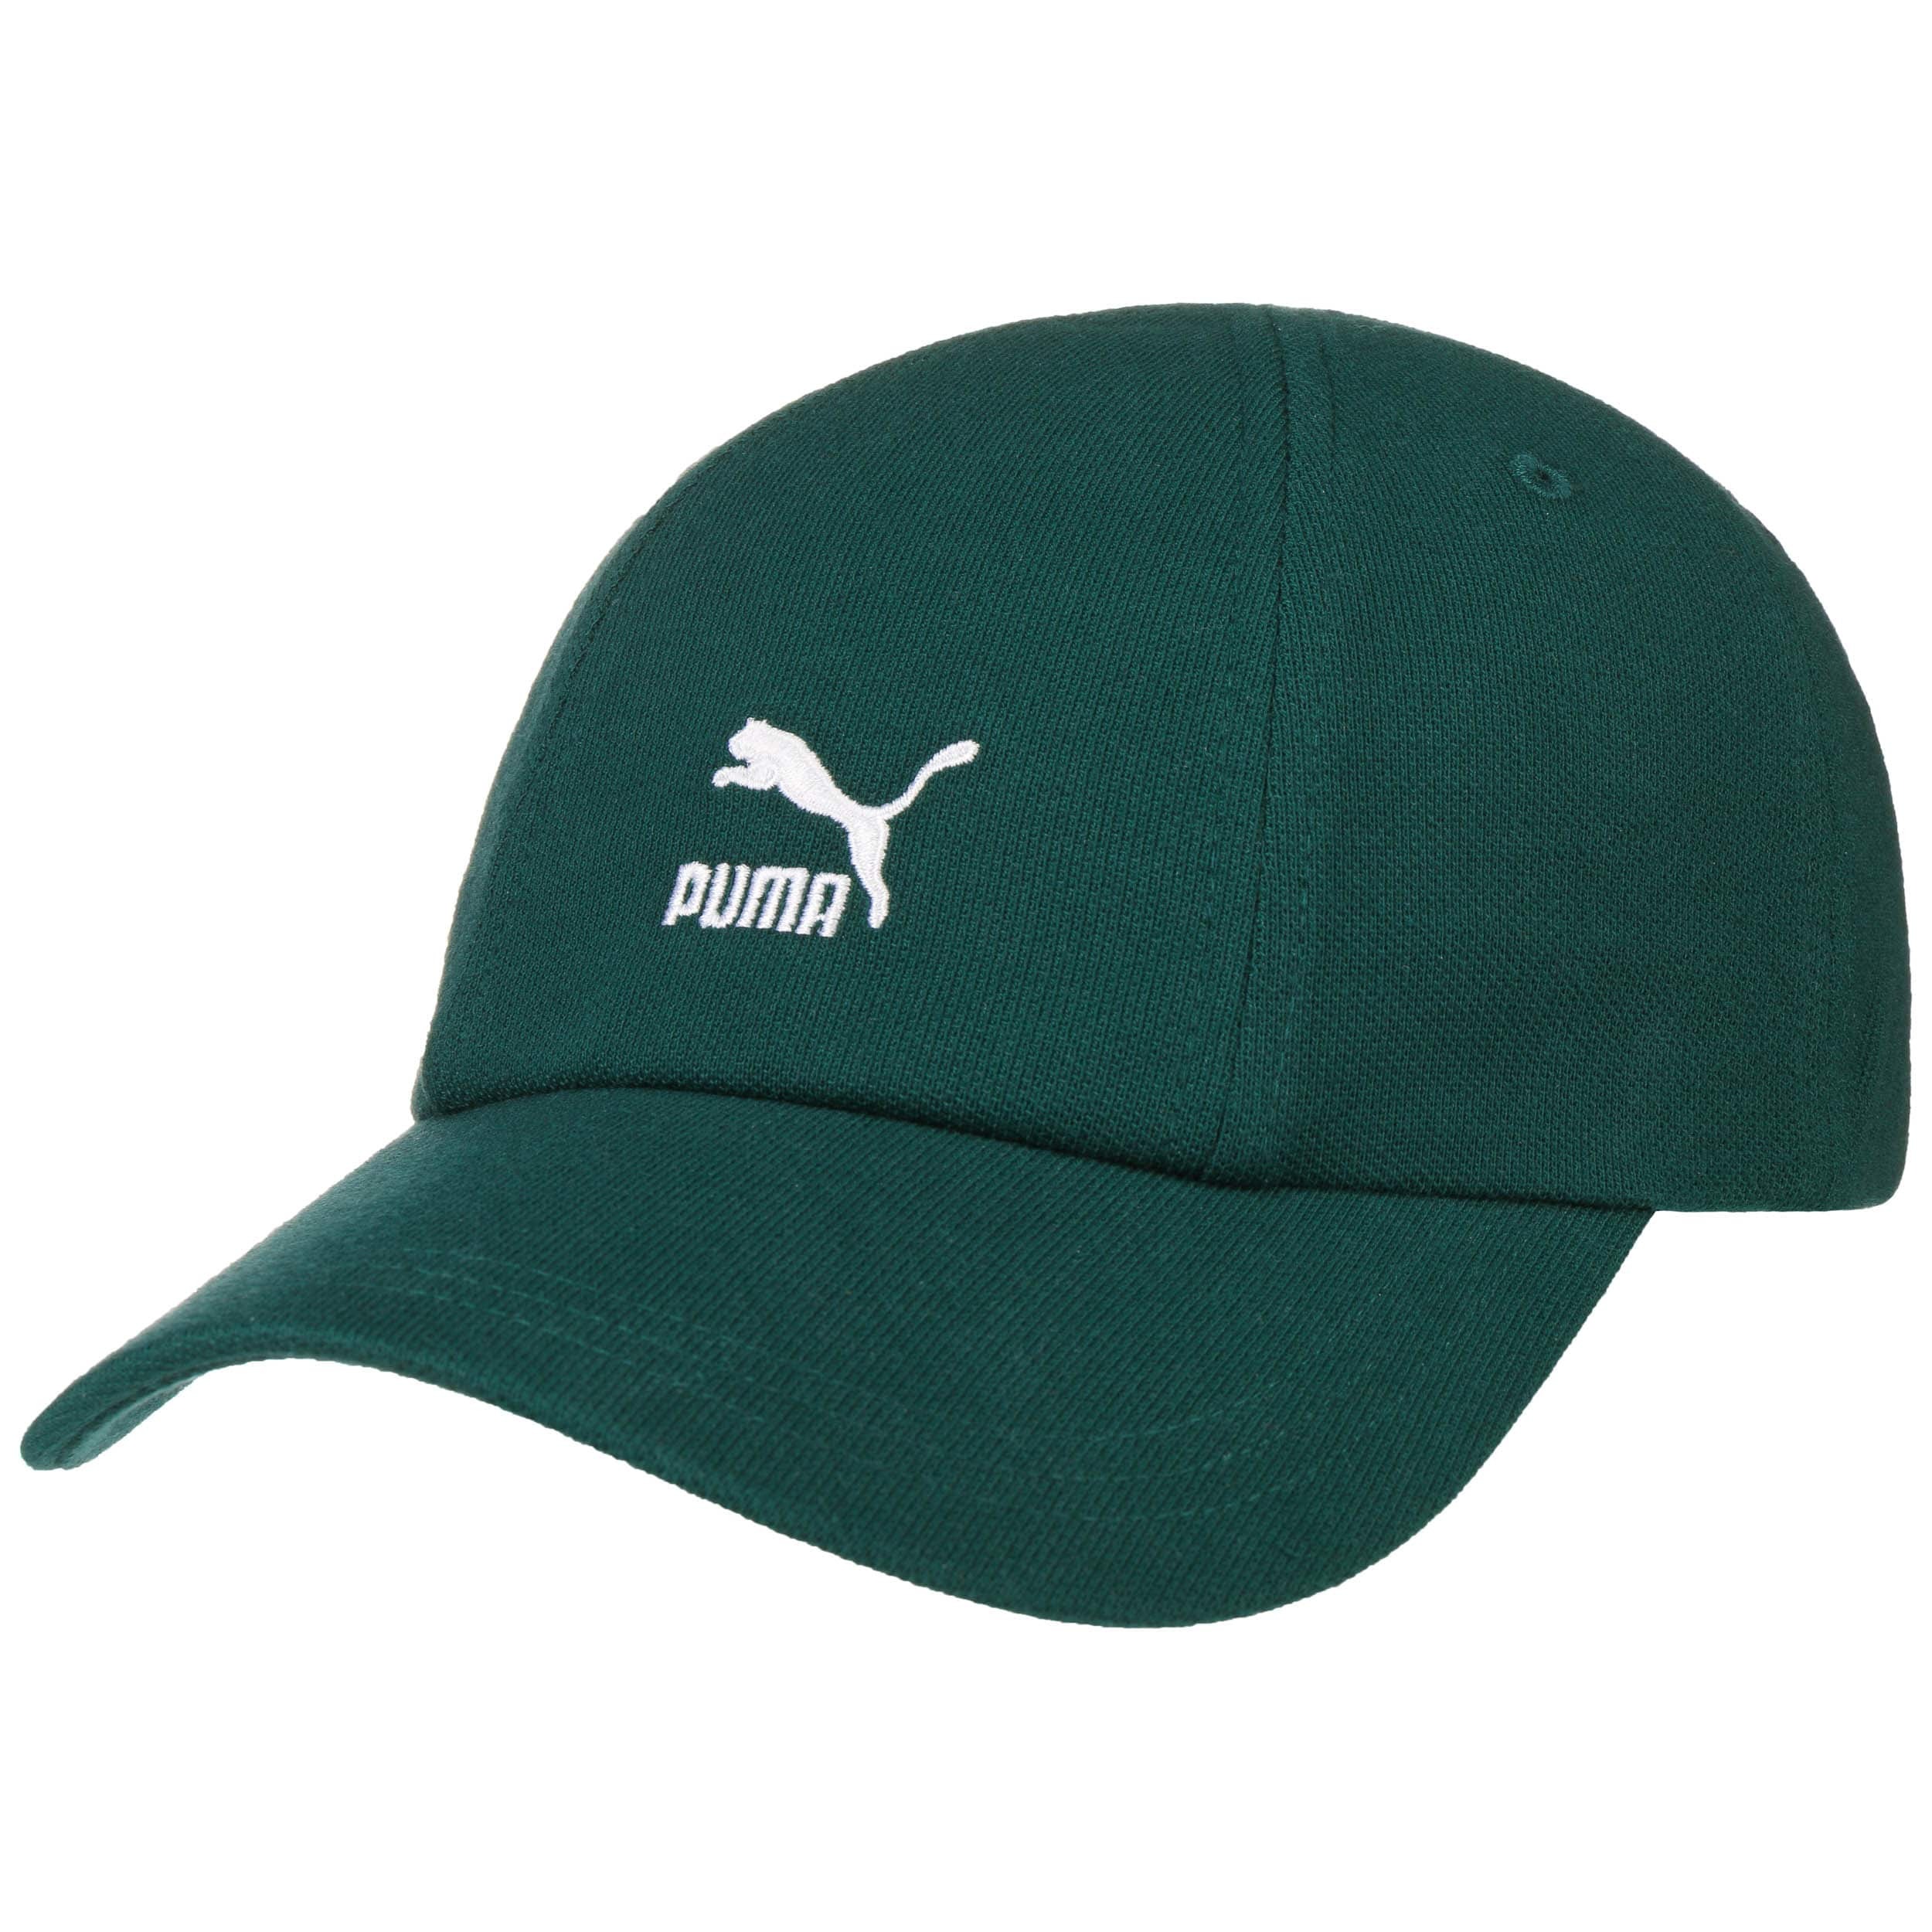 green puma hat